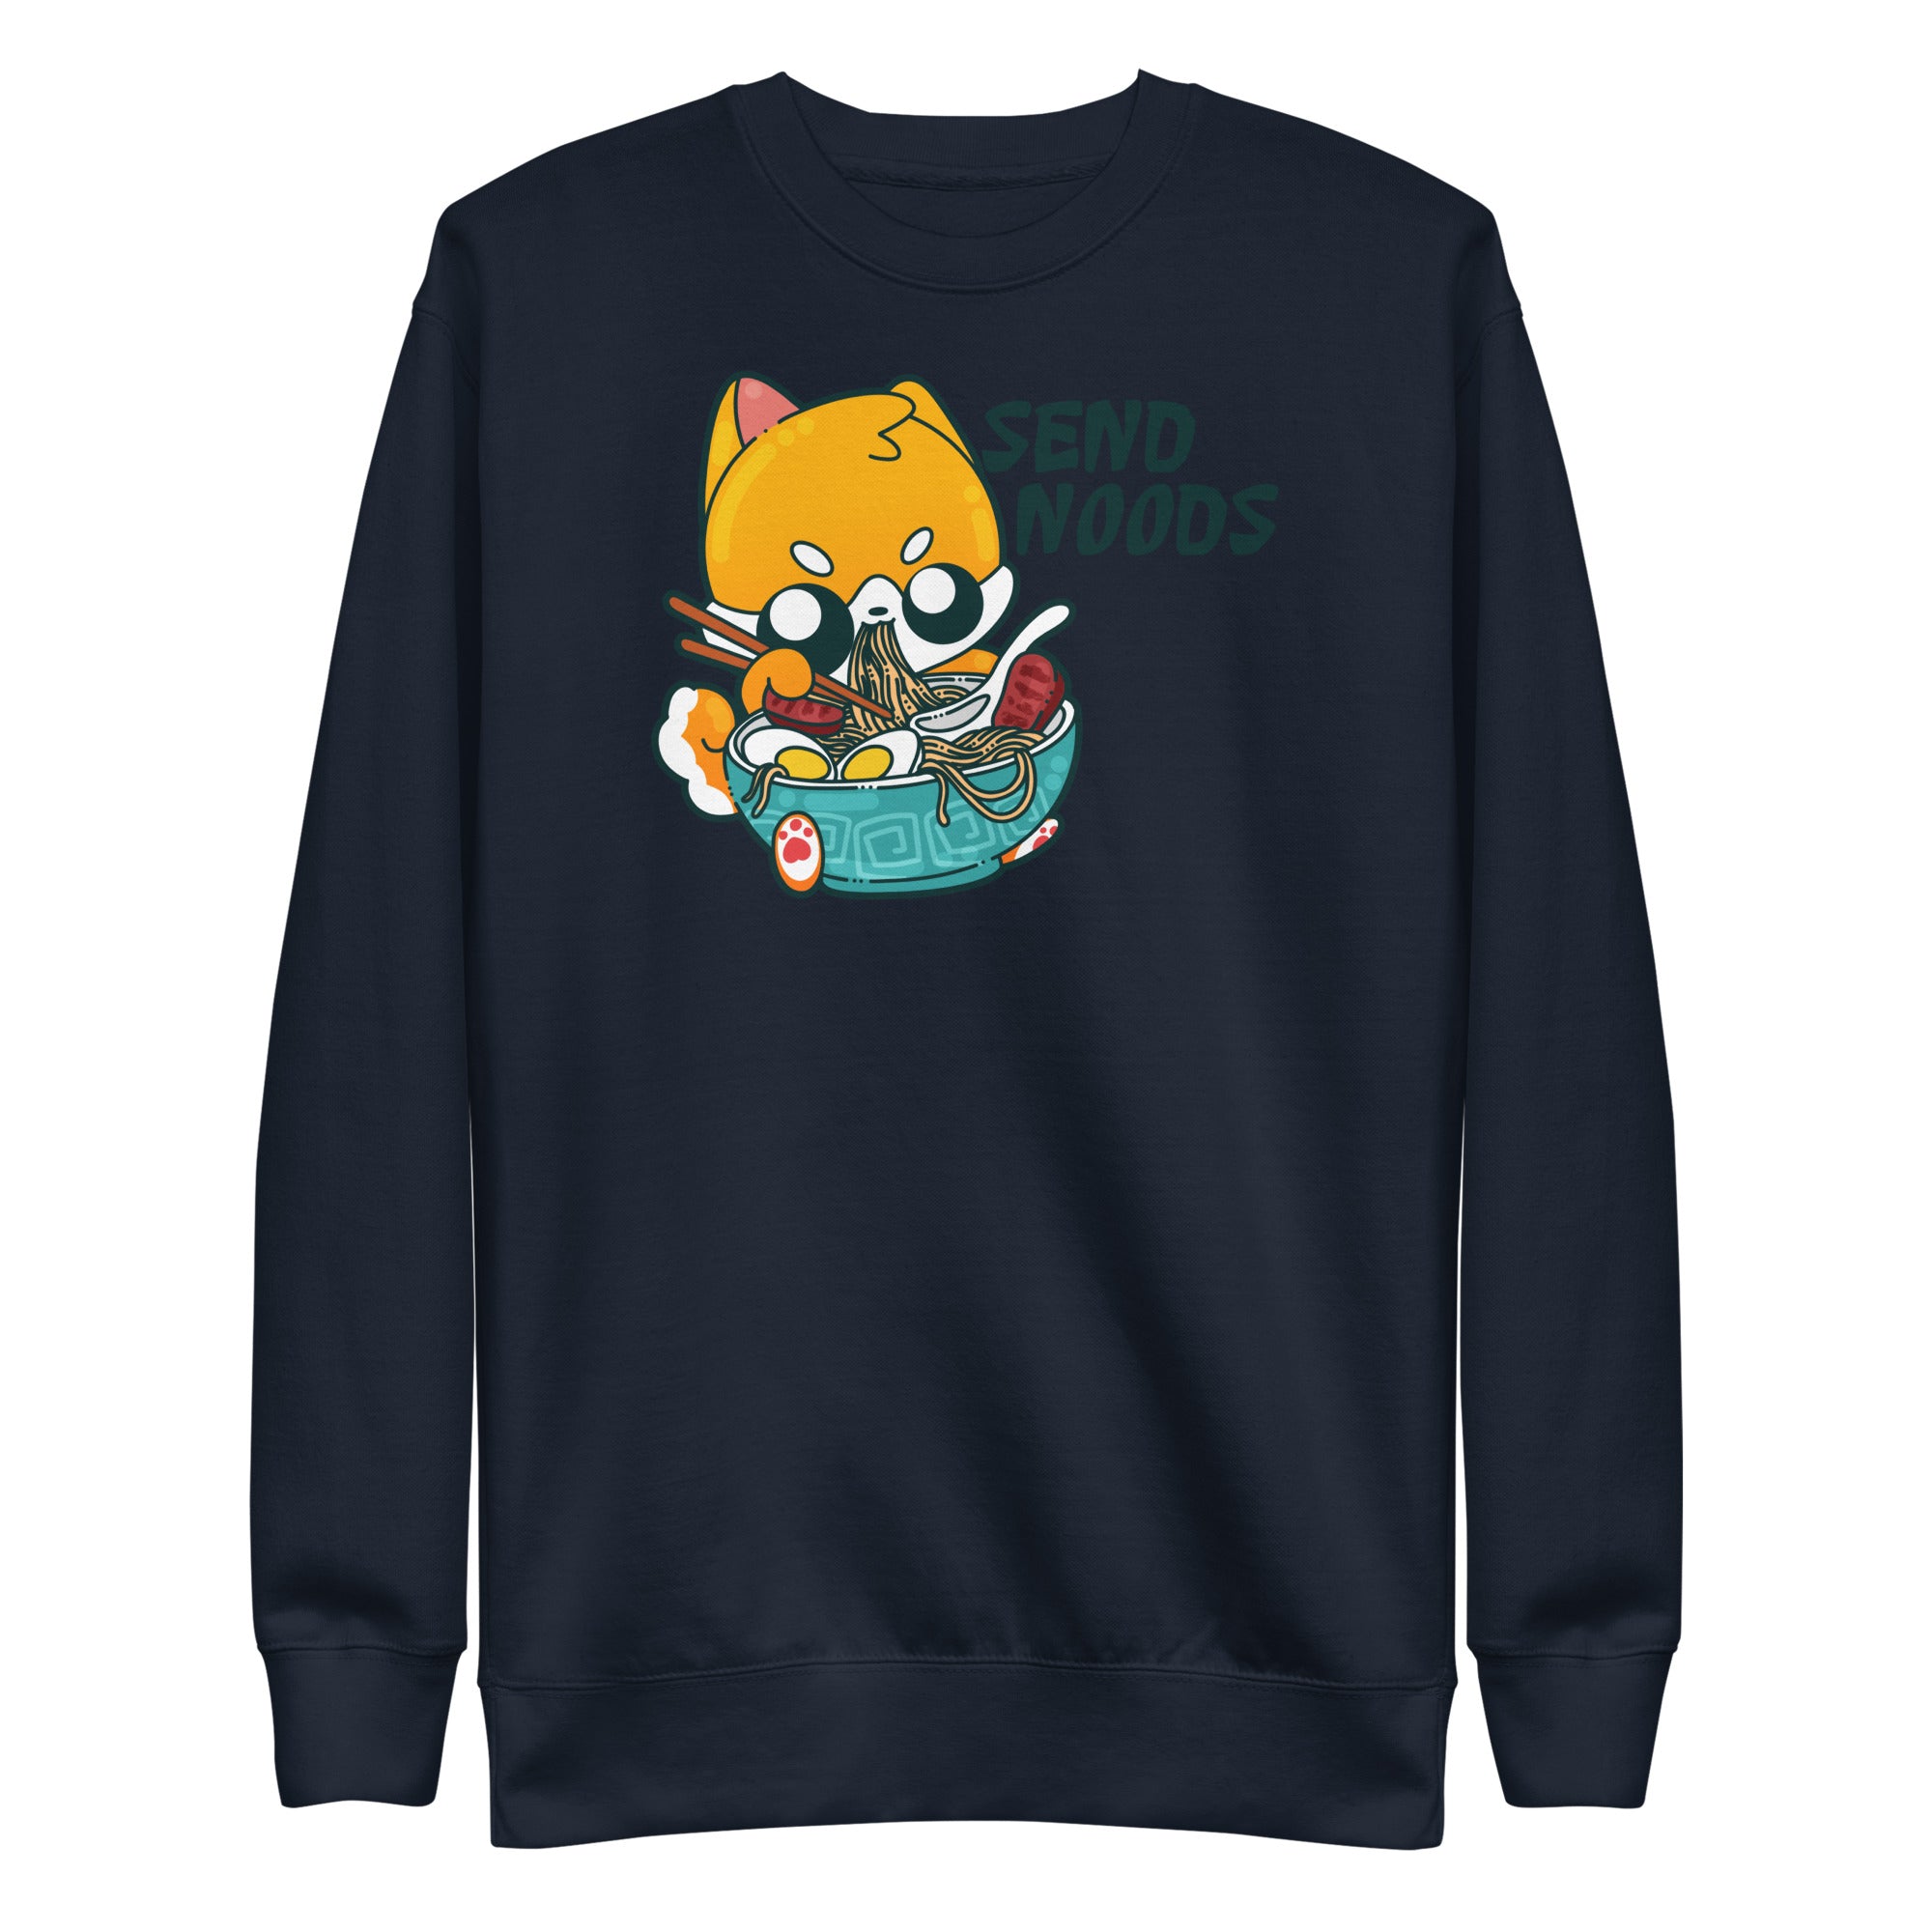 SEND NOODS - Premium Sweatshirt